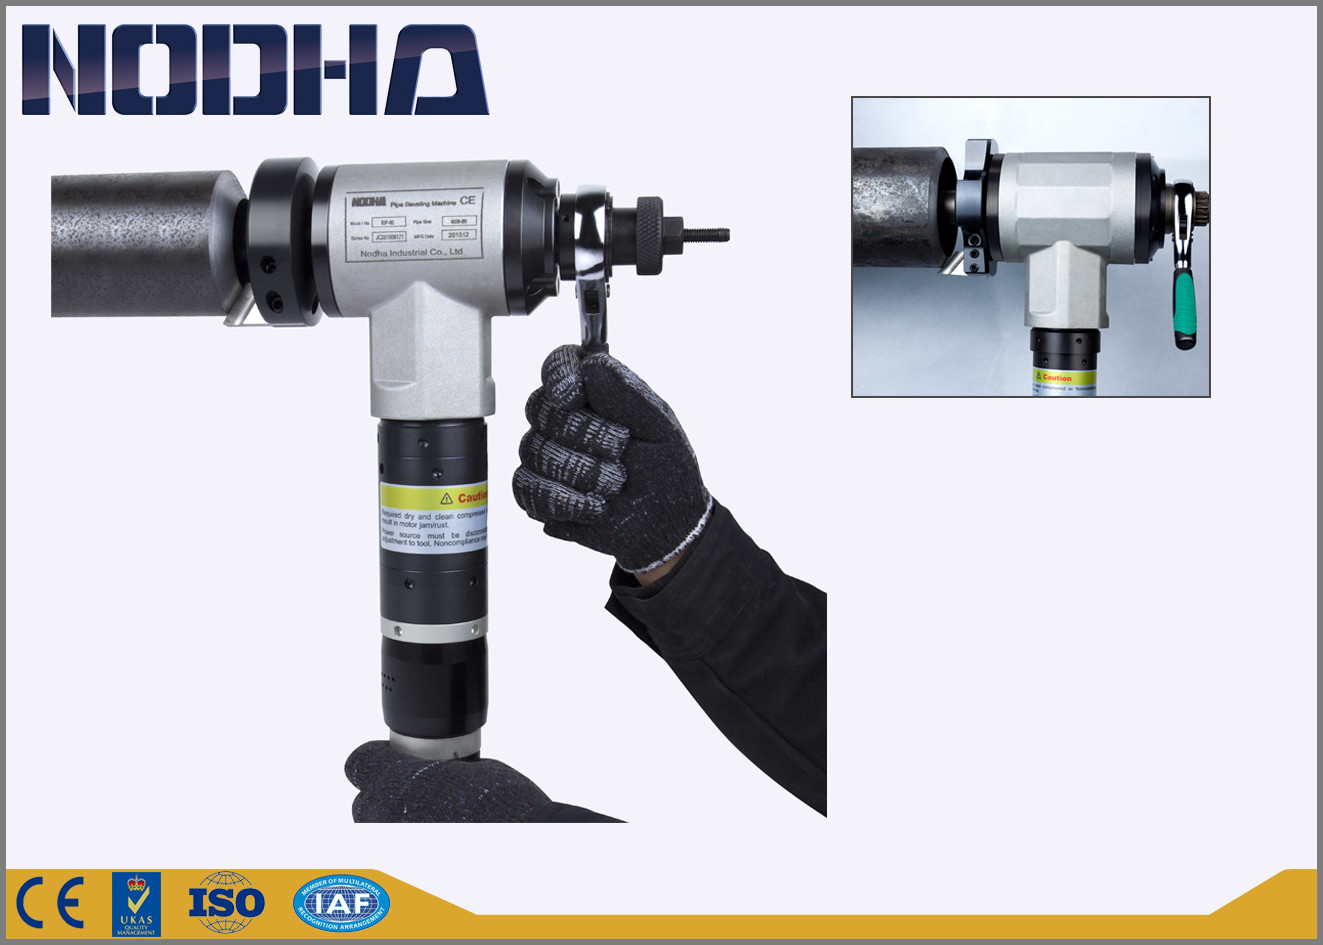 NODHAの空気のパイプ・カッターは、冷たい打抜き機容易な操作を配管します